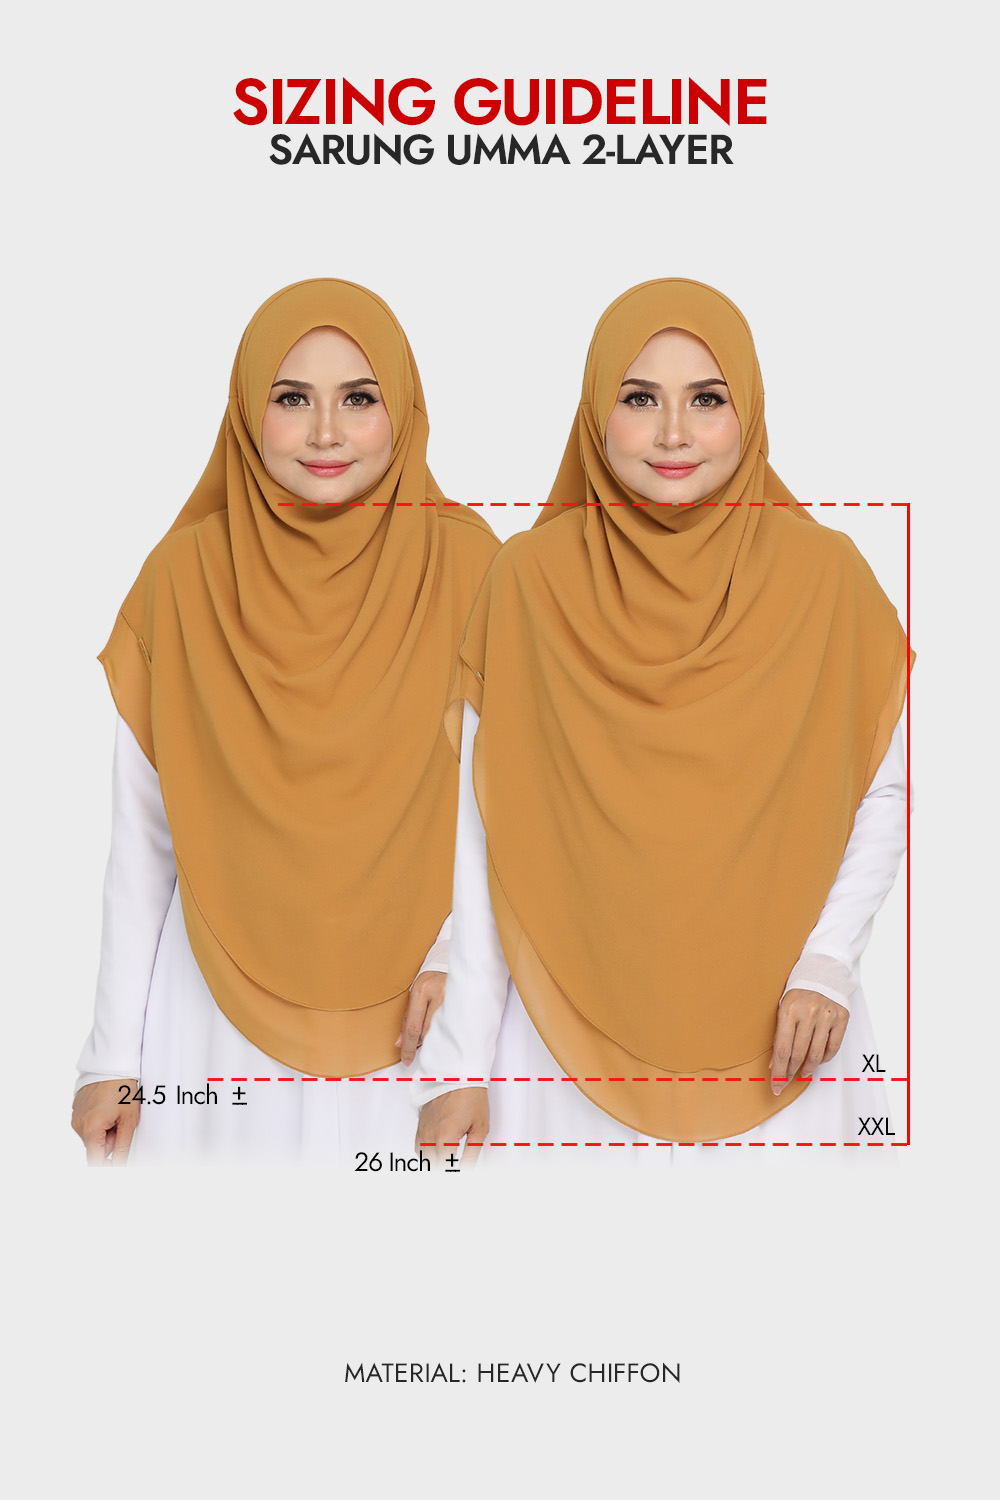 Umma 2-Layer Creamy Yellow